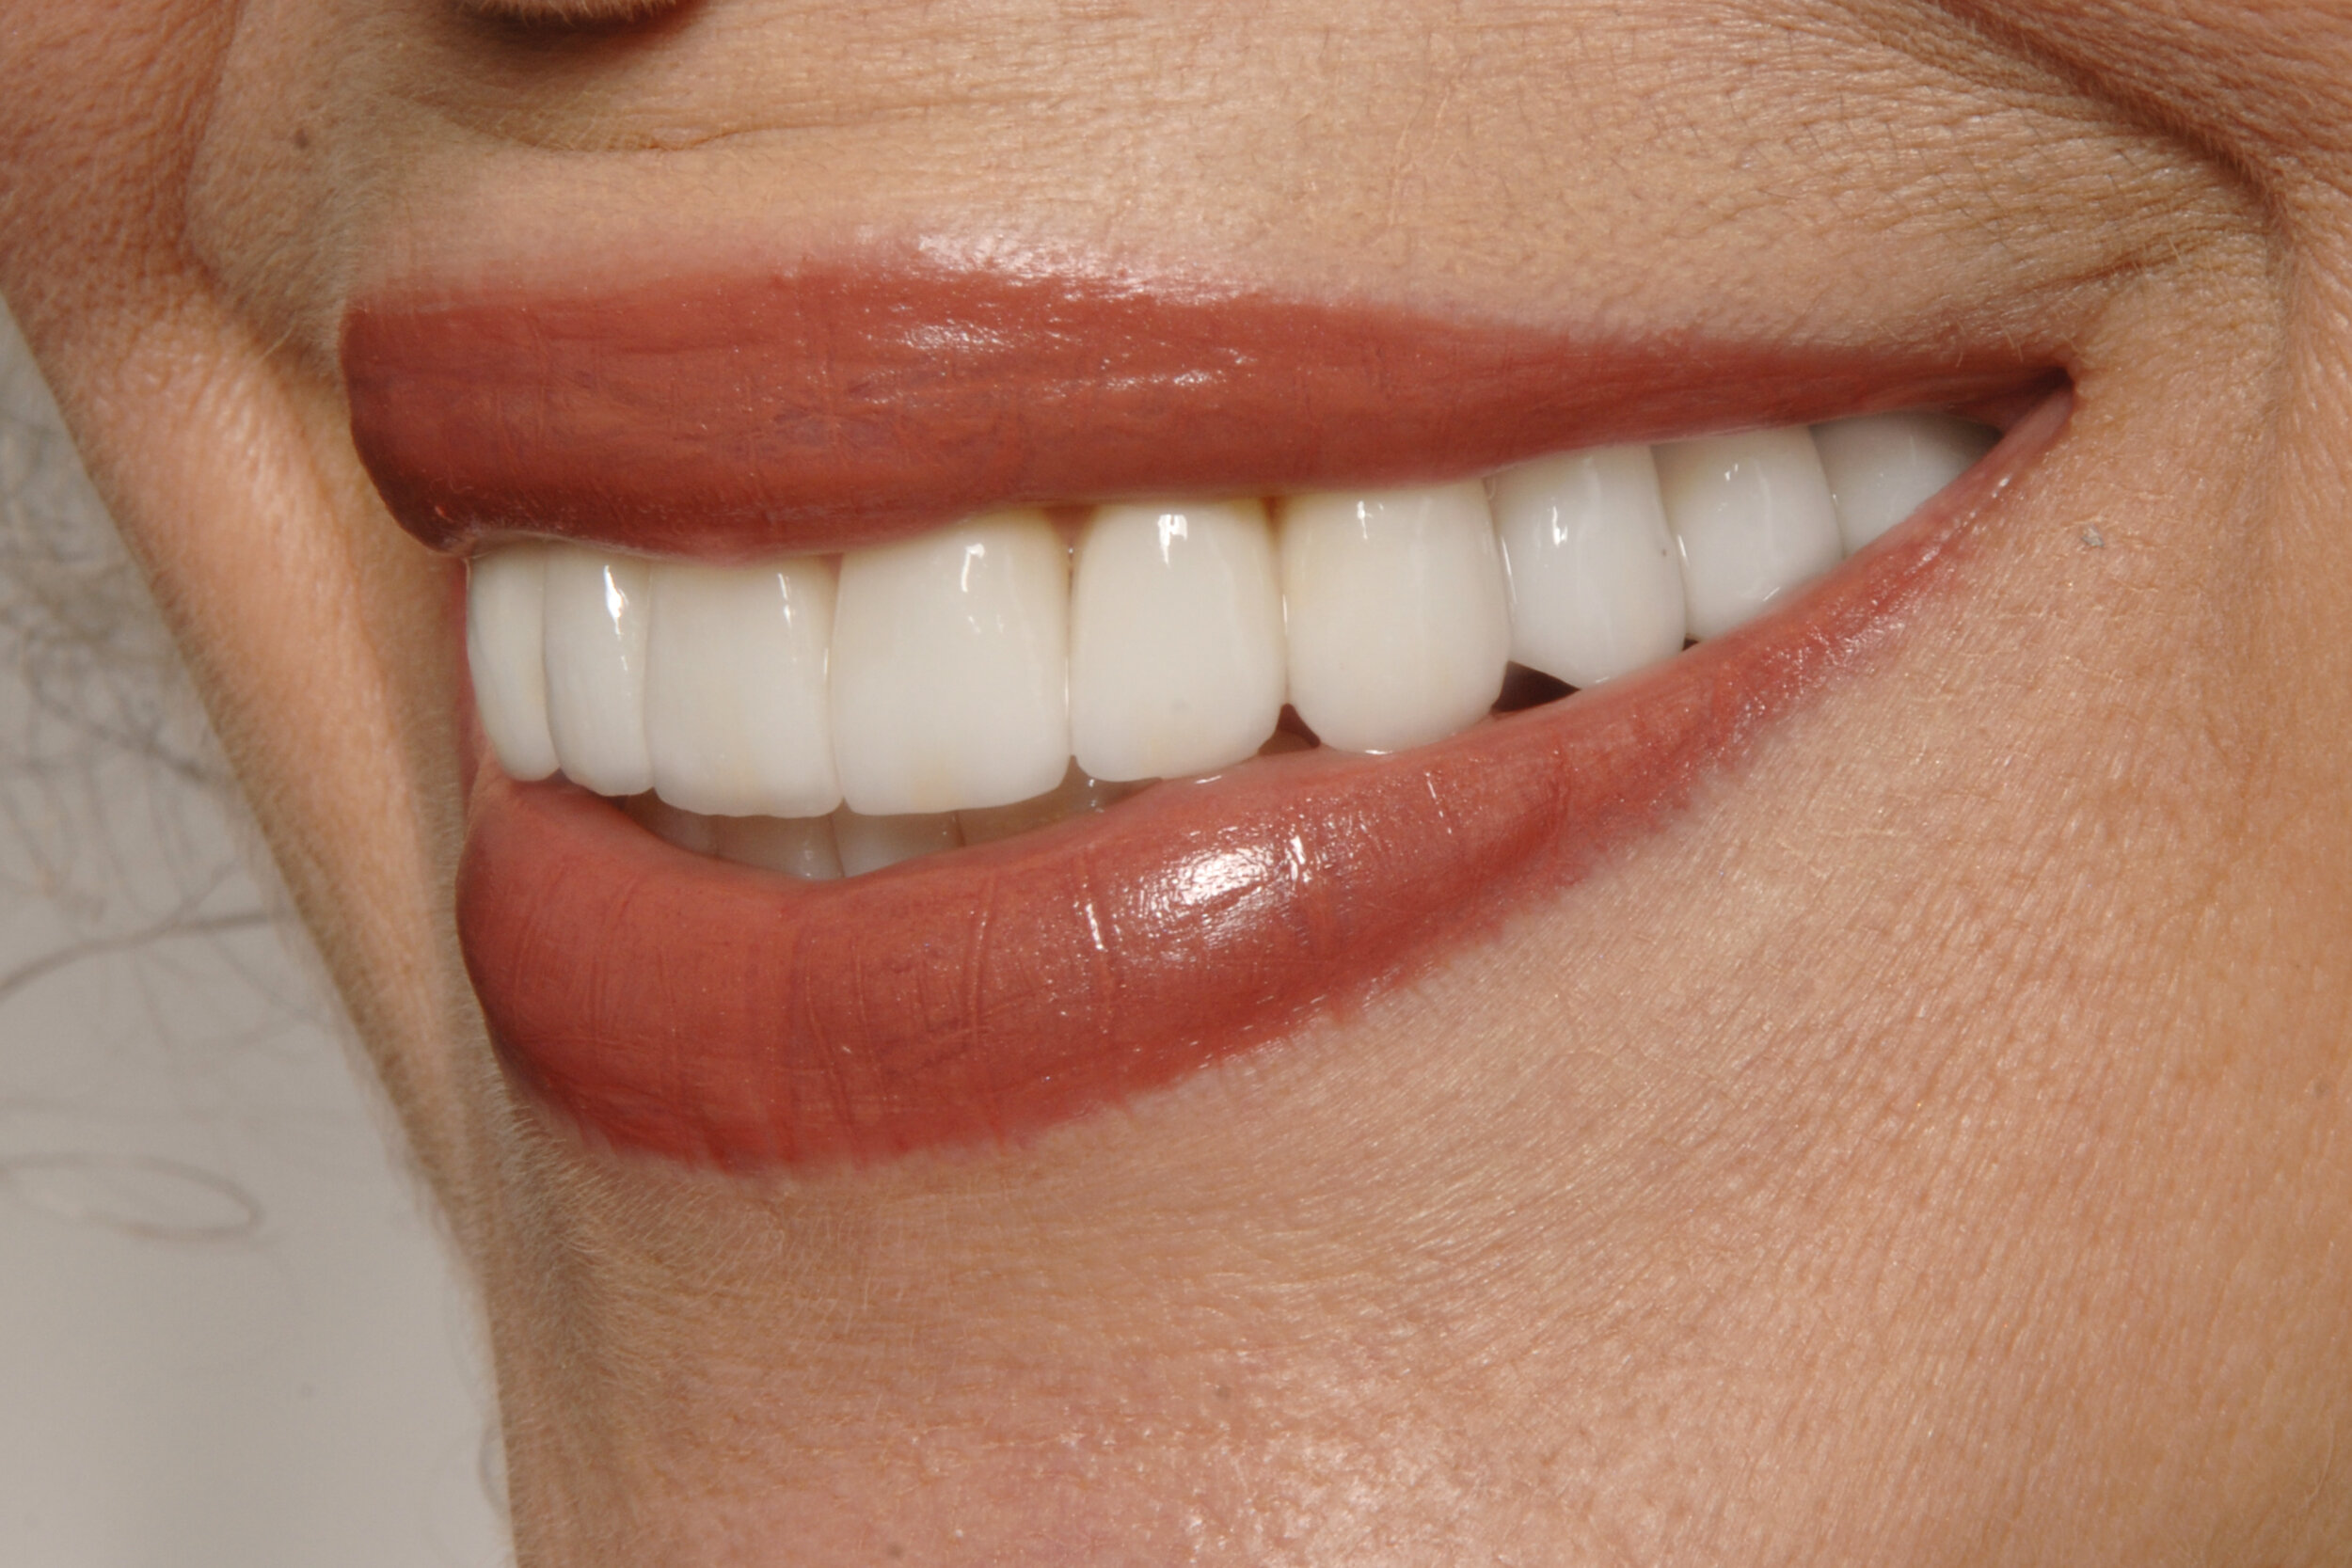  Case 1 - Left side natural smile after full mouth reconstruction 